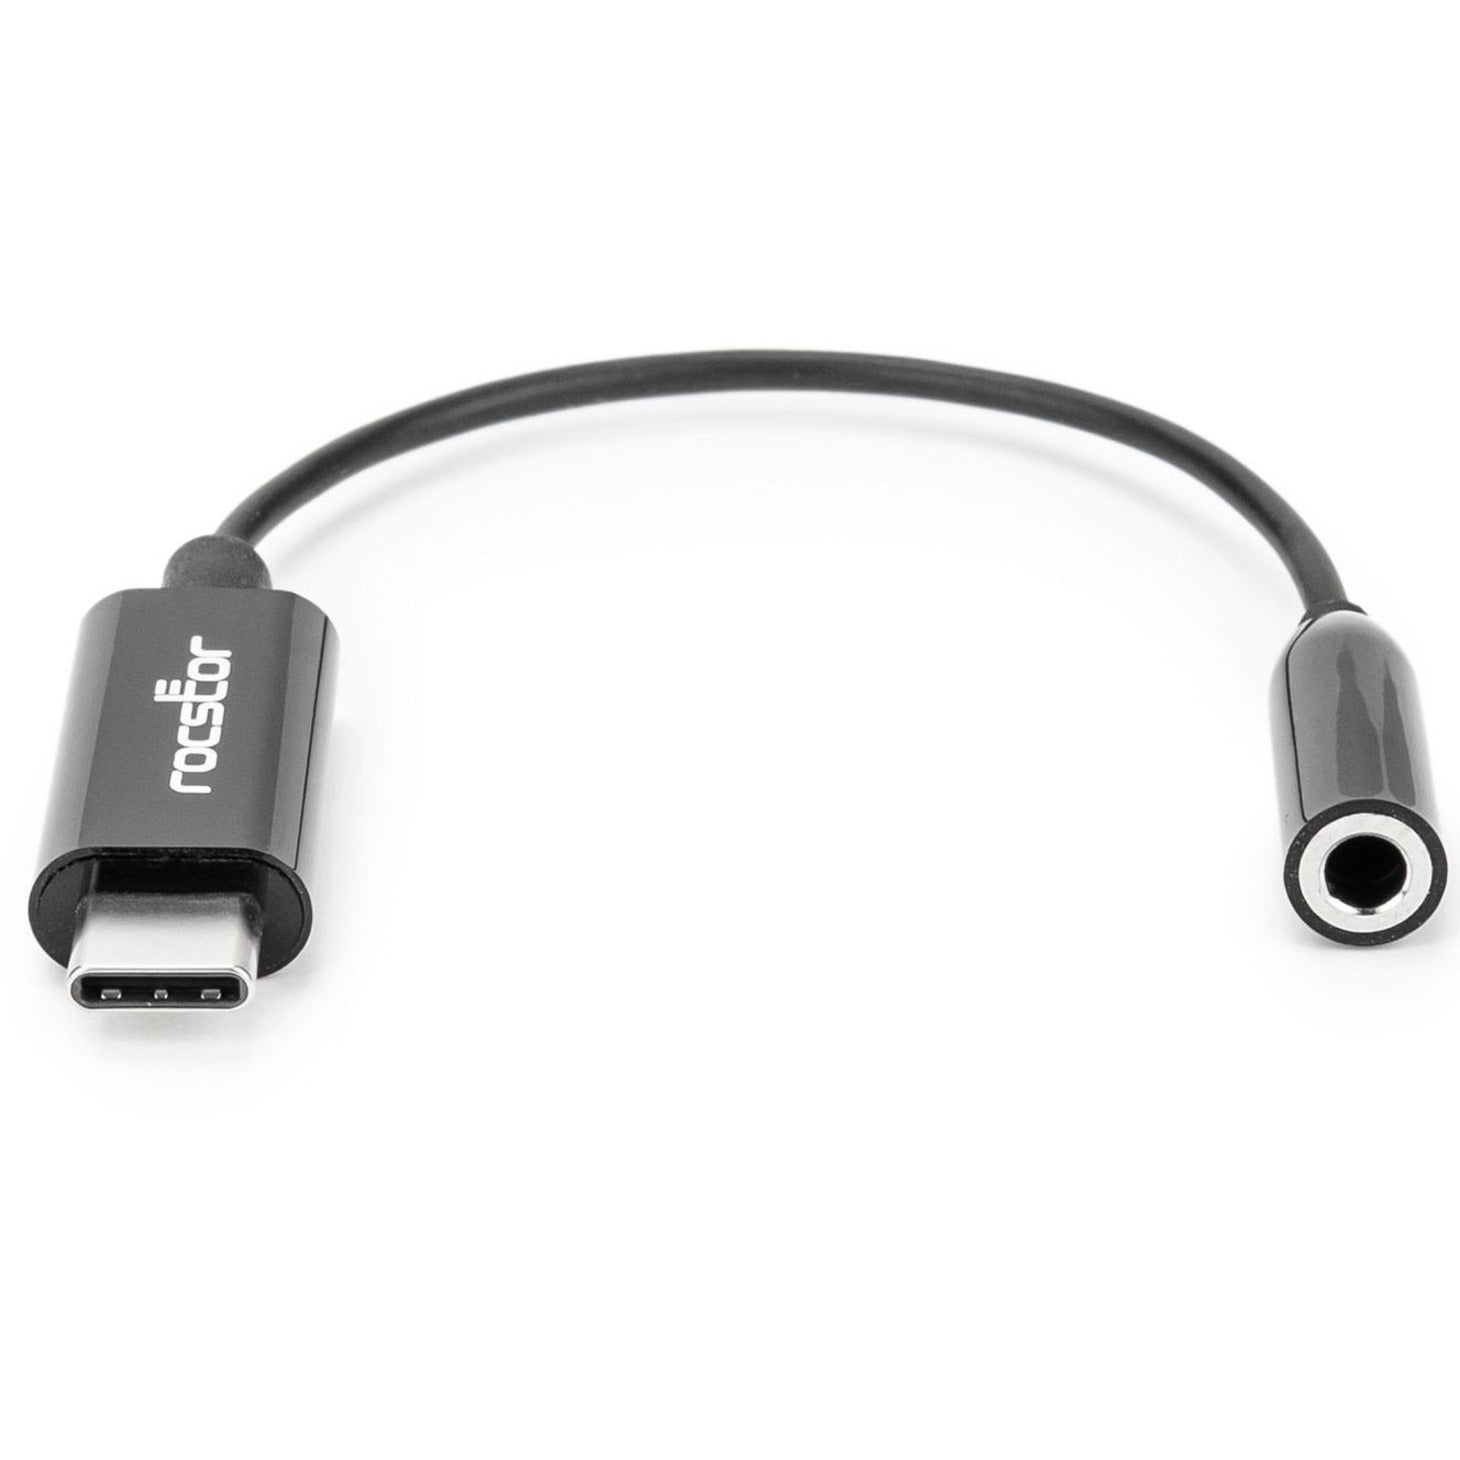 Rocstor Y10A244-B1 USB C to 3.5mm Audio Adapter, Premium Audio Adapter